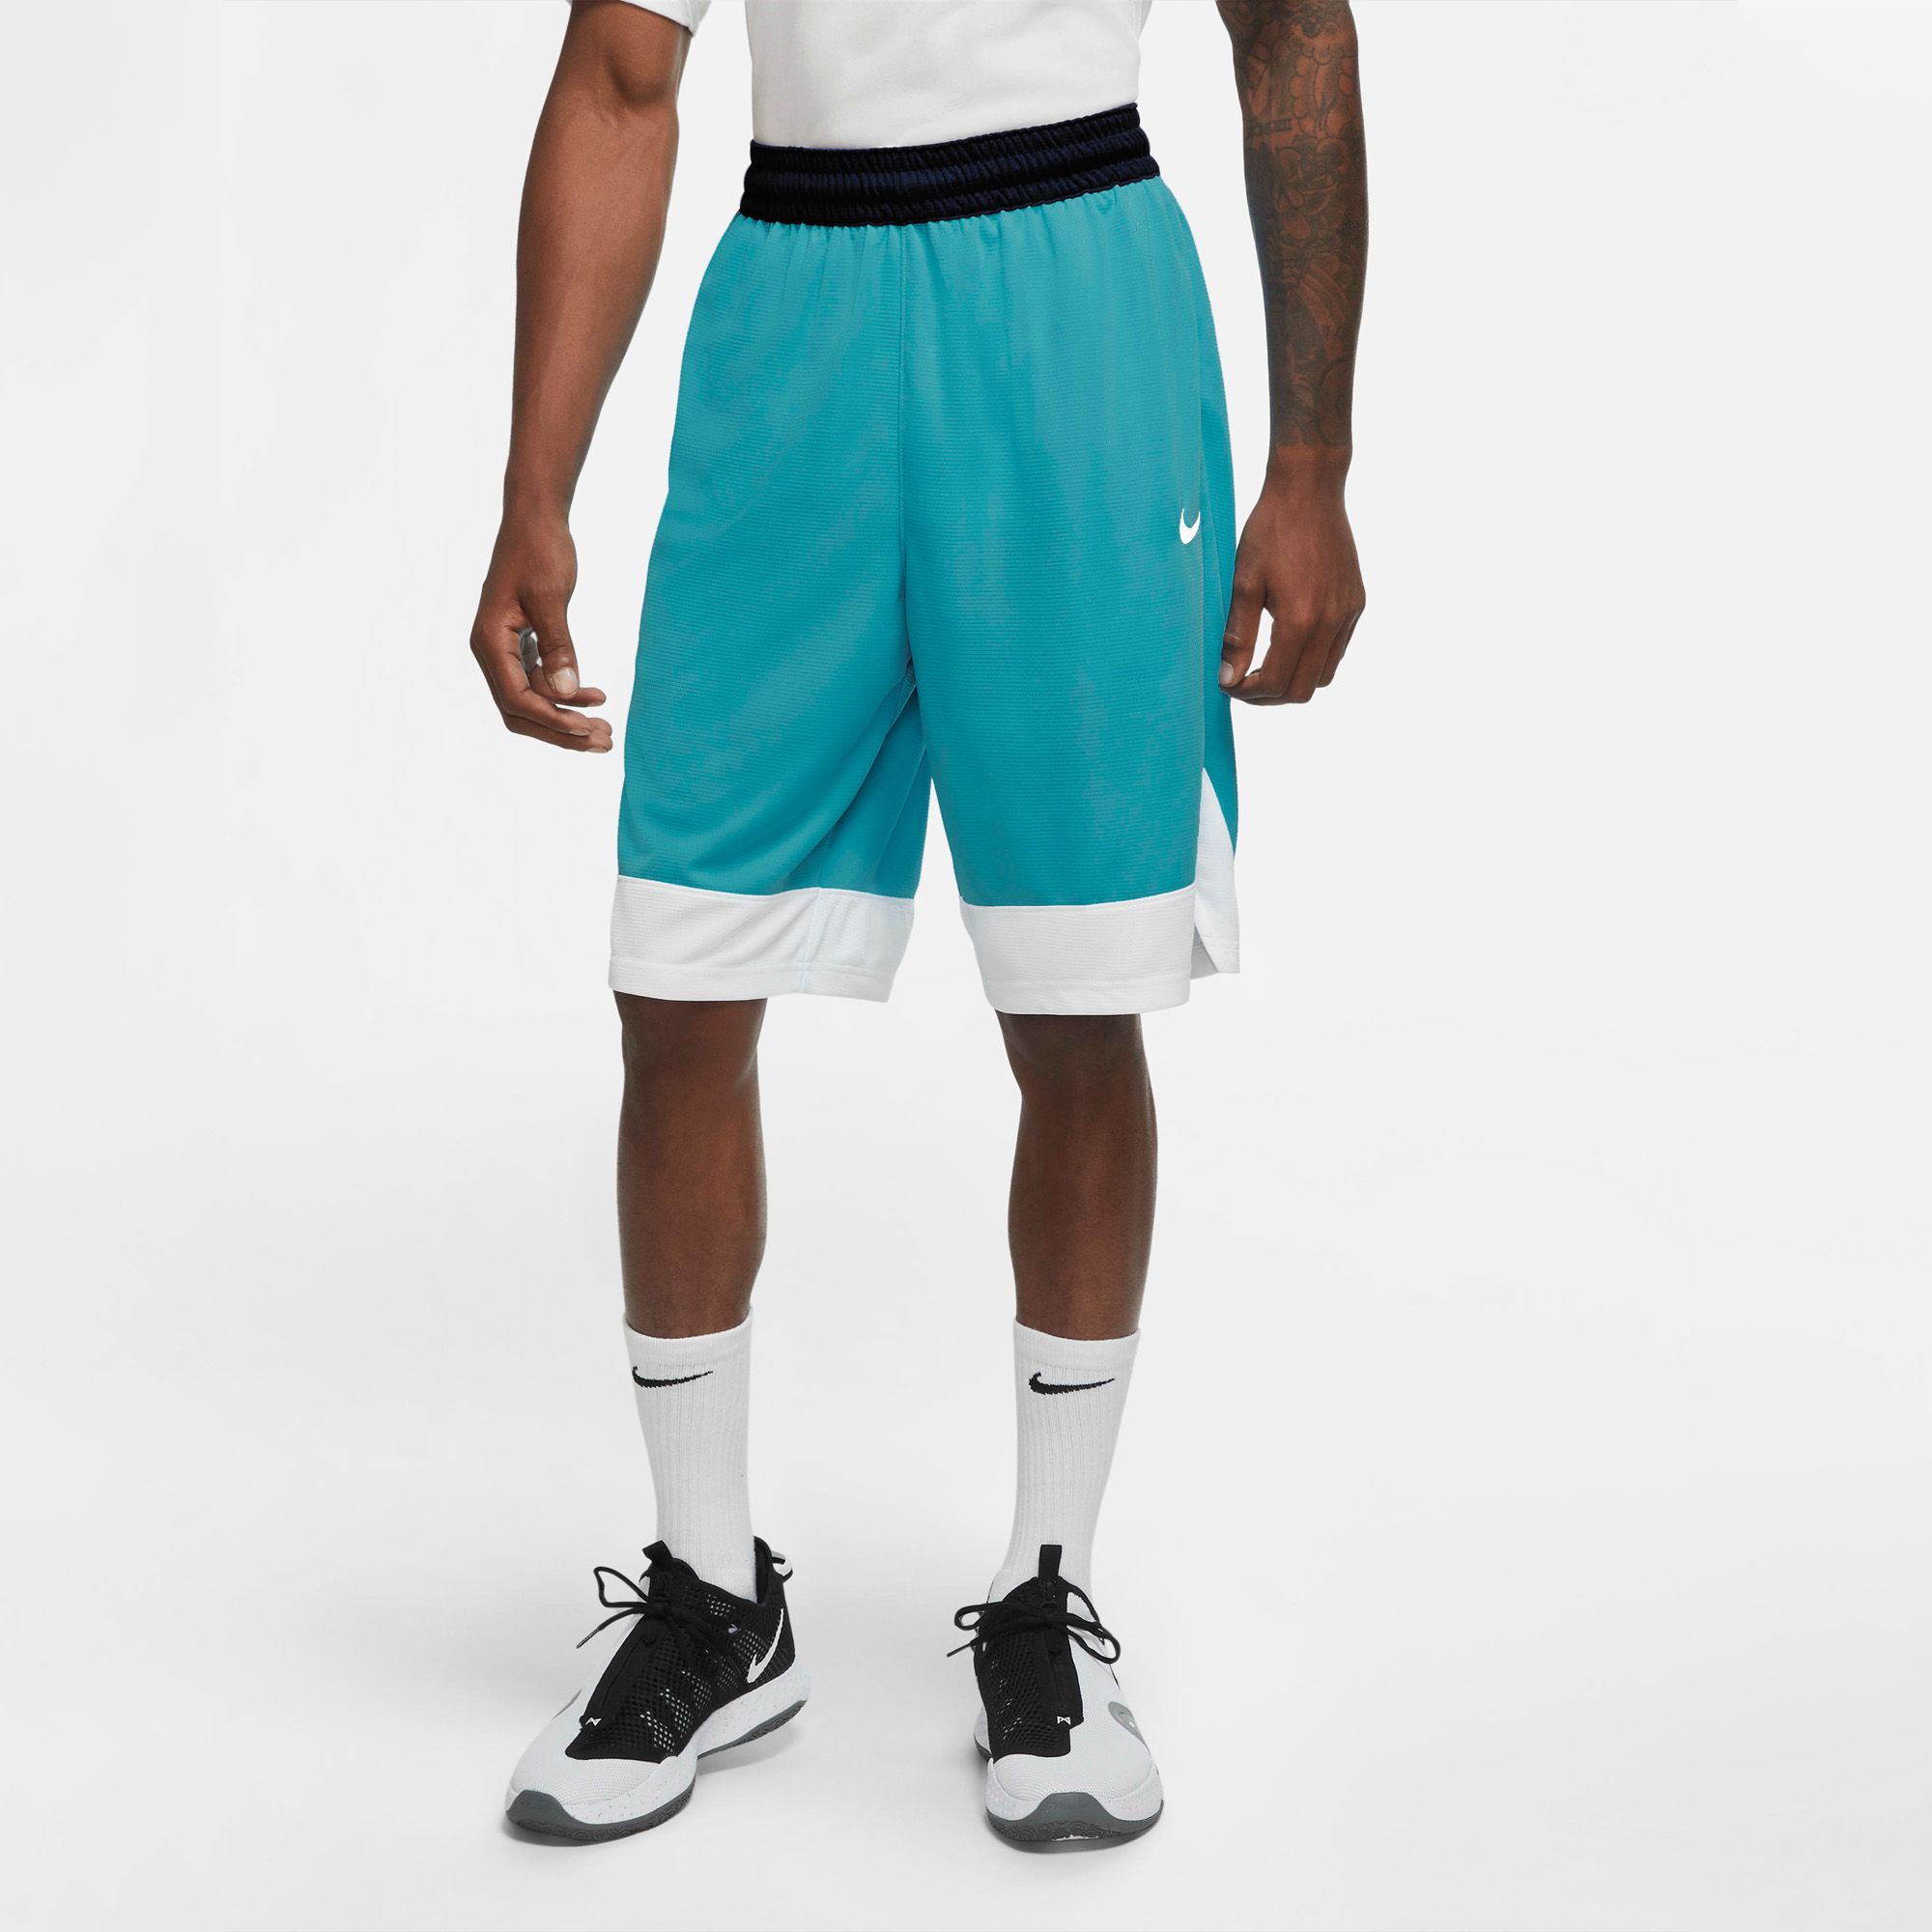  Nike Dri-FIT Icon Basketball Shorts - Teal 